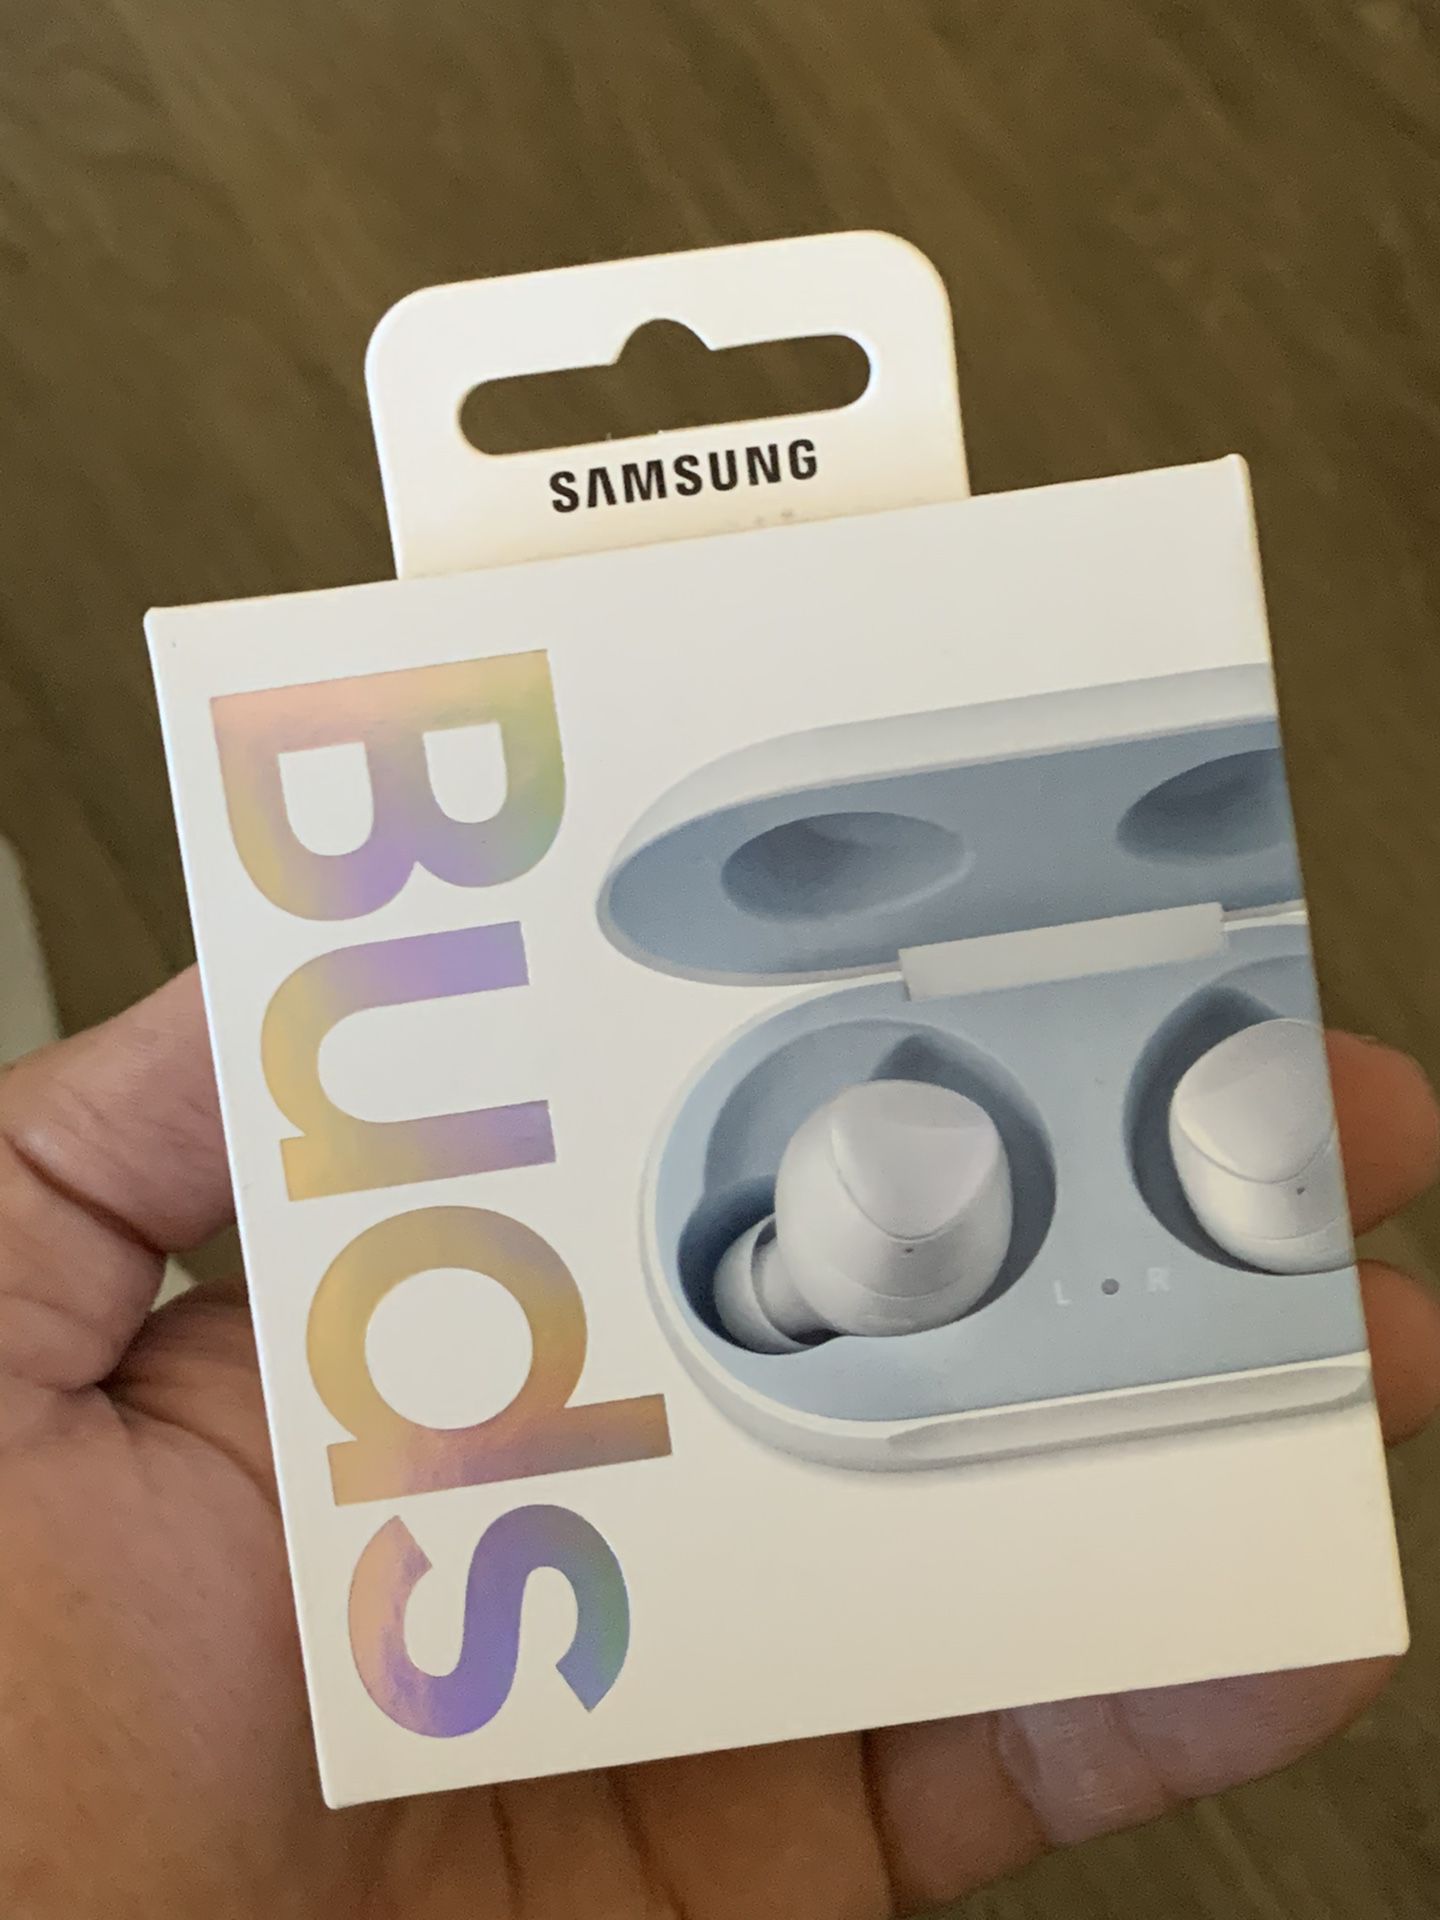 Samsung Galaxy Buds - New in Box